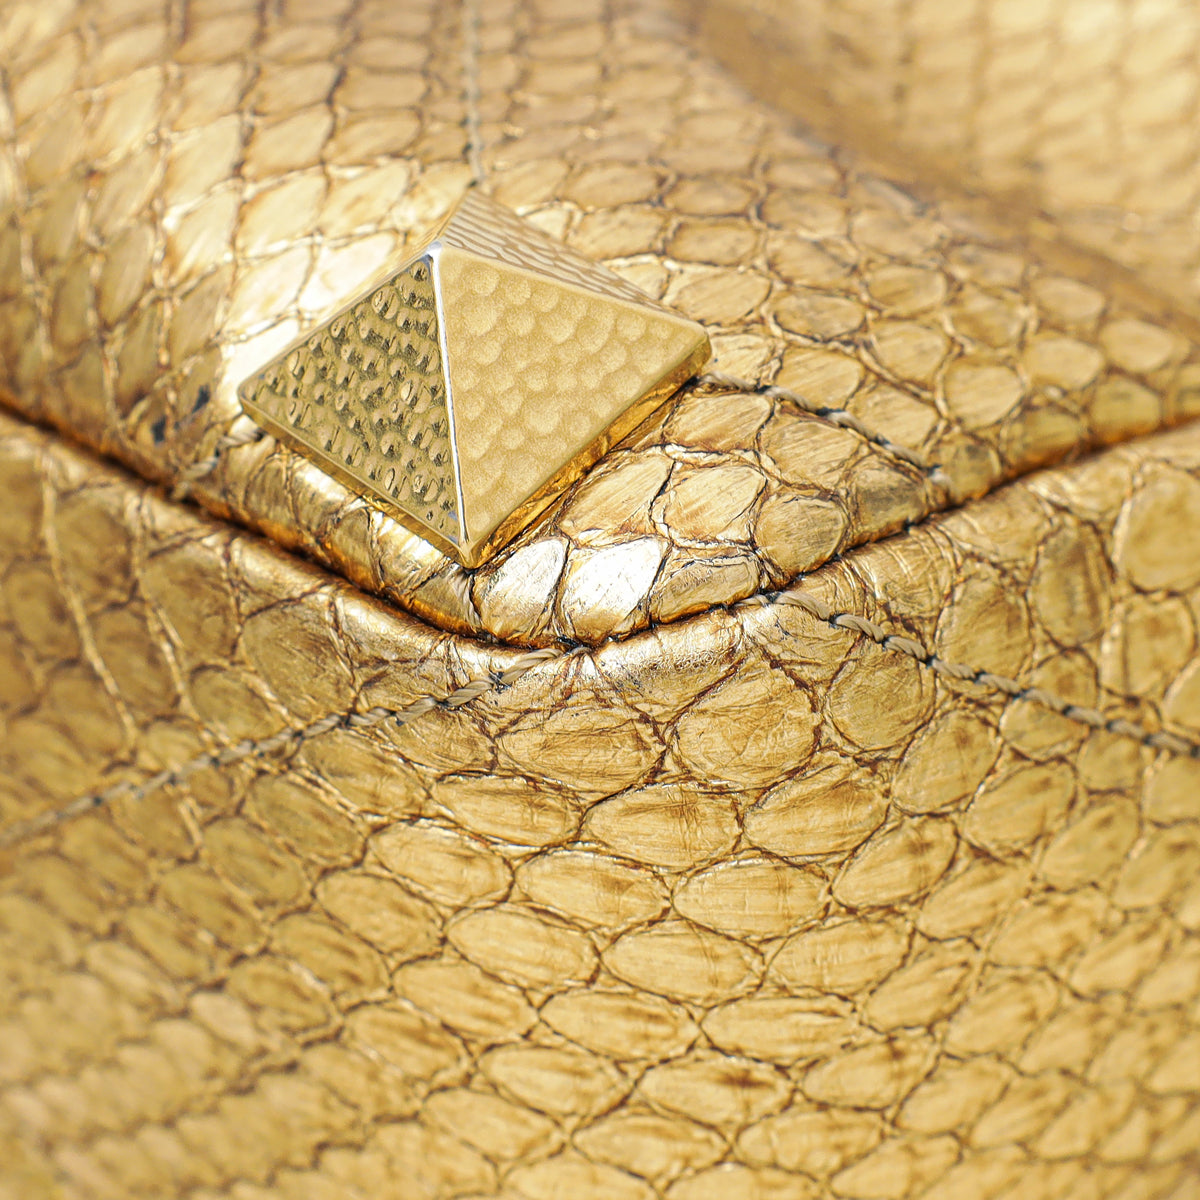 Valentino Metallic Gold Roman Stud The Shoulder Bag Large